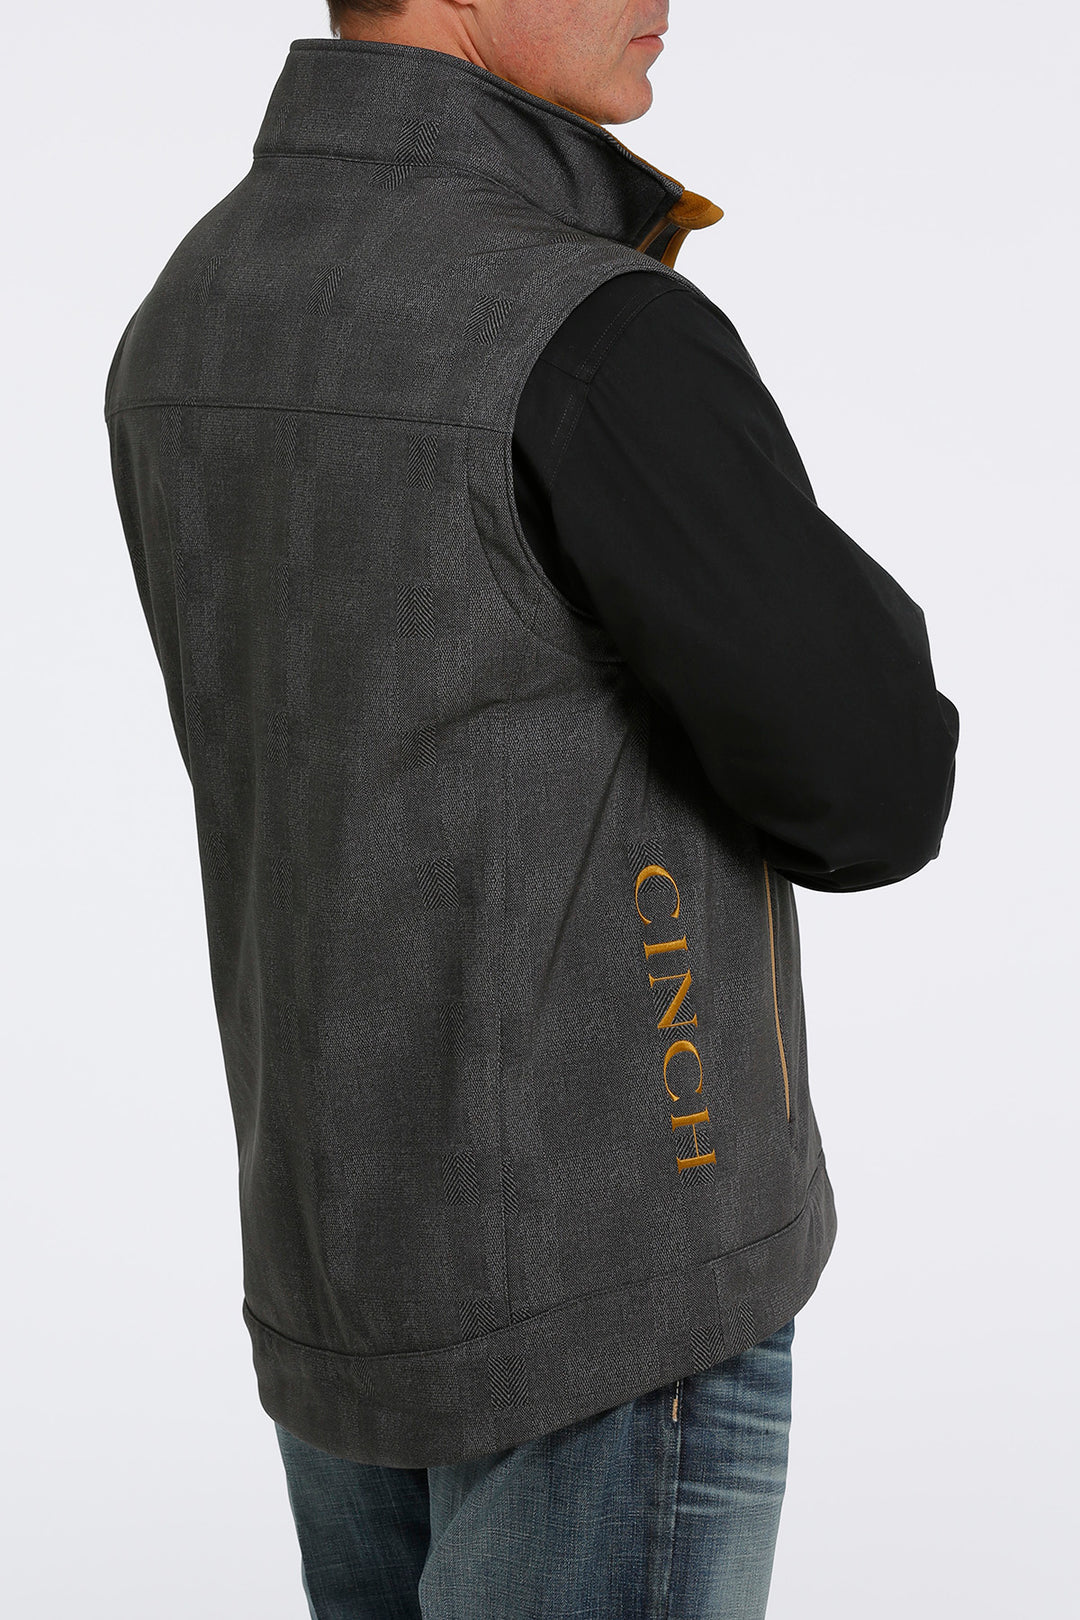 back viewCinch | Charcoal Bonded Concealed Carry Vest